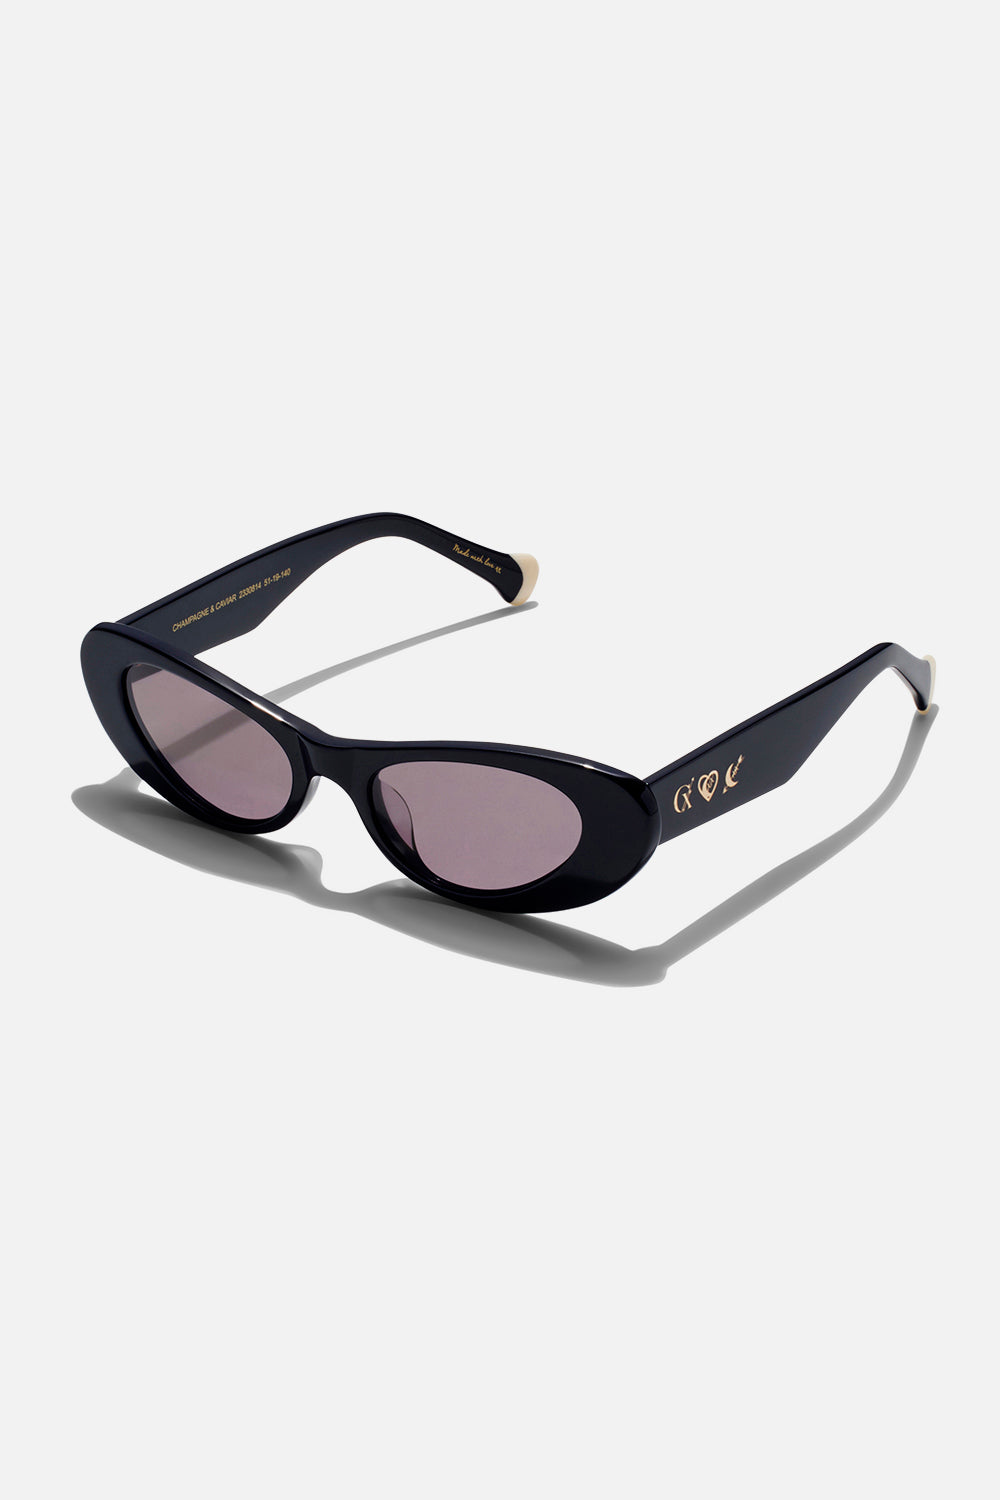 Champagne & Caviar cat eye sunglasses in Solid Black by CAMILLA